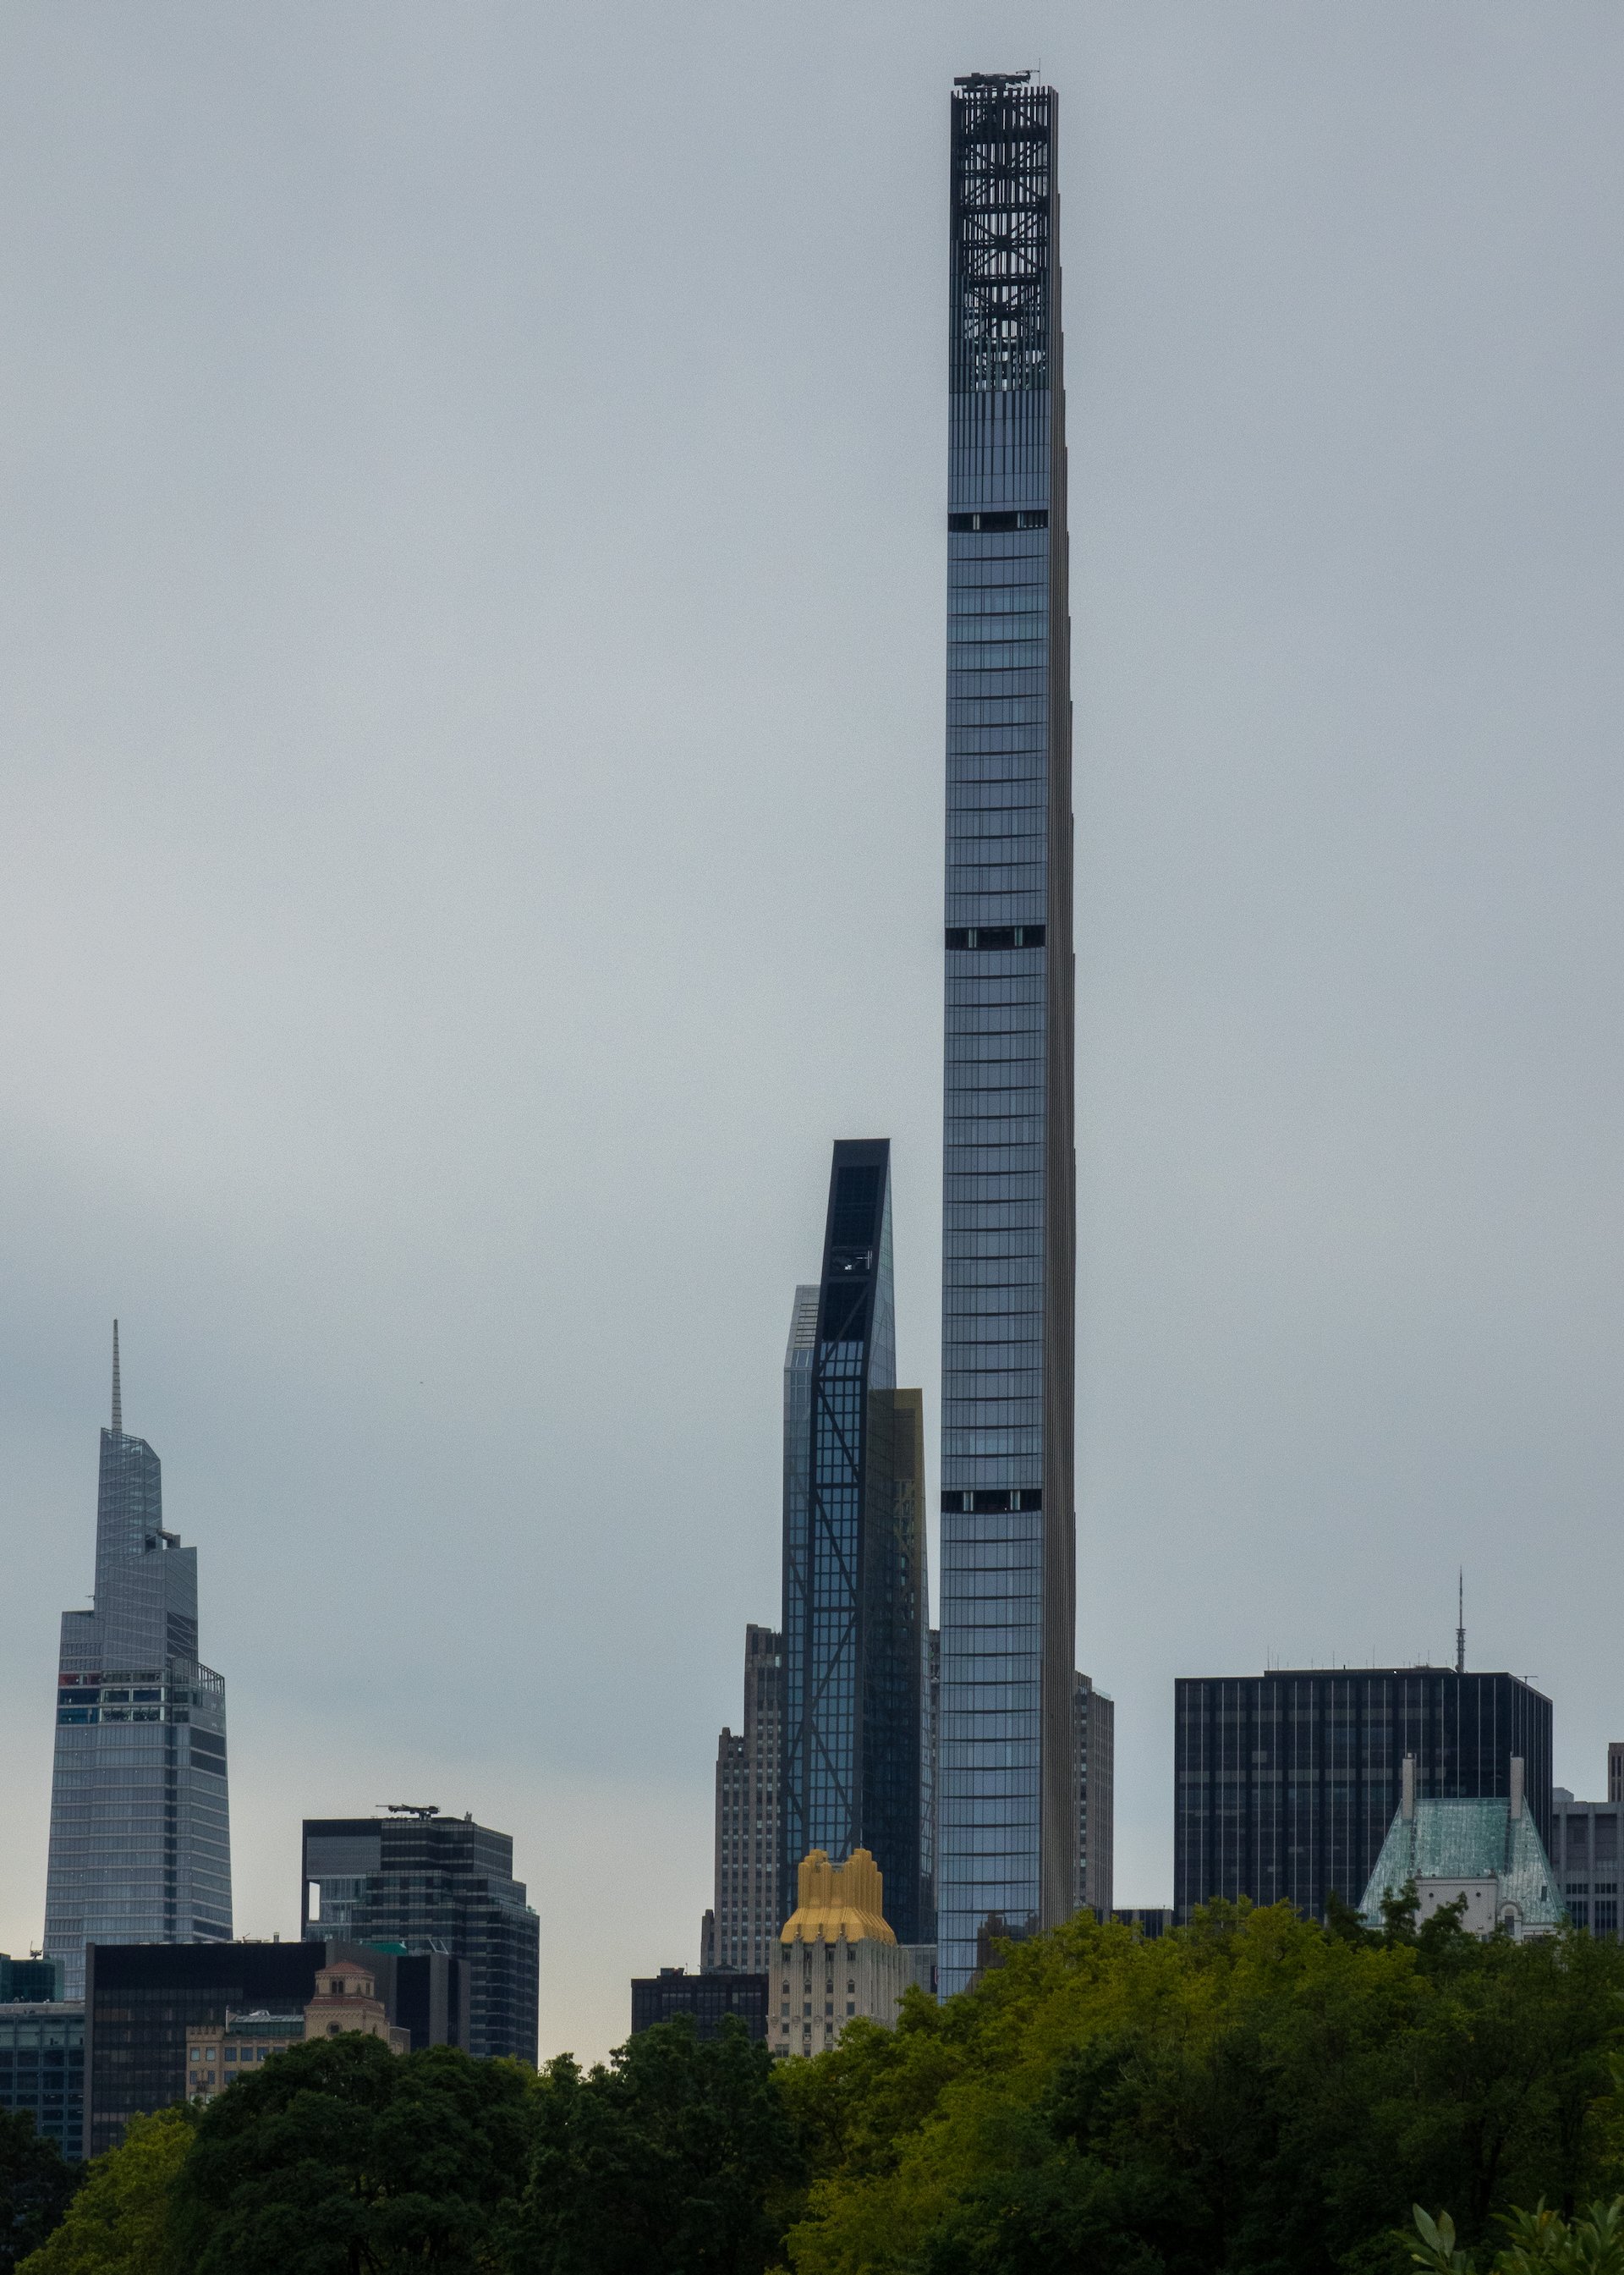  The tallest, skinniest building on the skyline.  